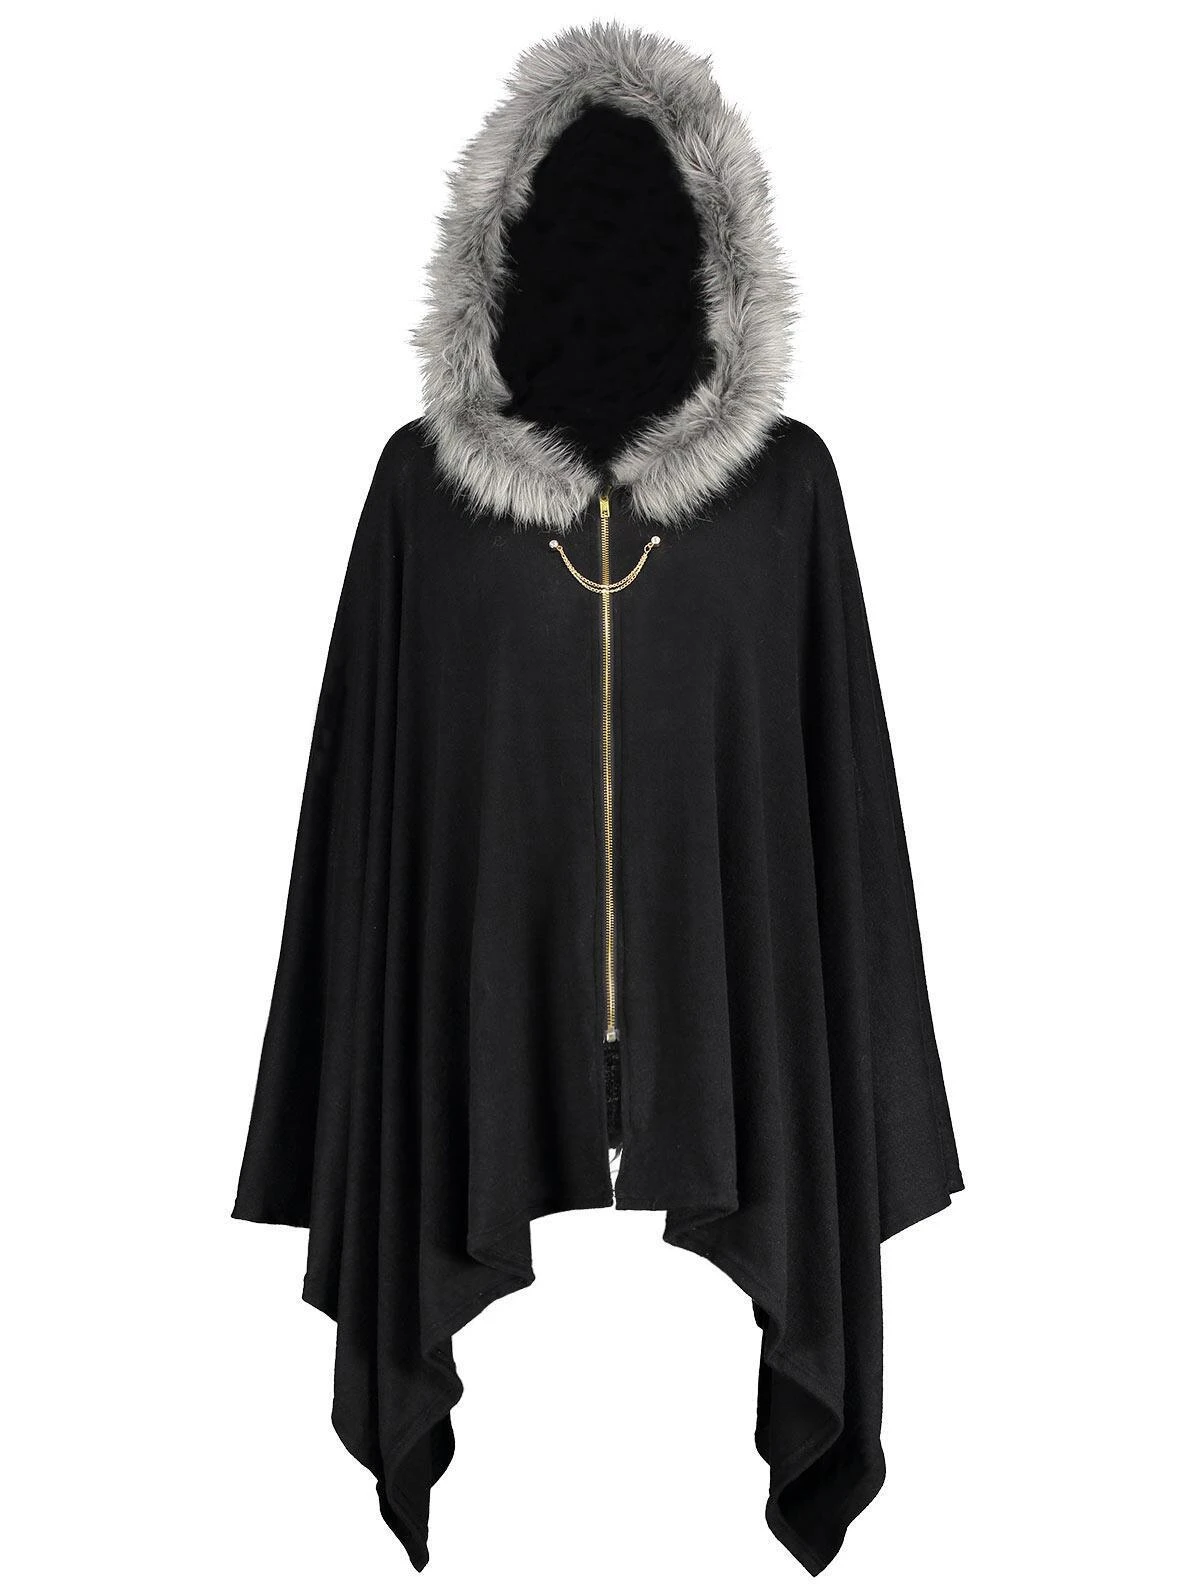 Moda Medieval celta vikingo Halloween ropa de mujer capa de lana capa abrigo tronos Estilo de piel capa alto 202|chaquetas básicas| - AliExpress